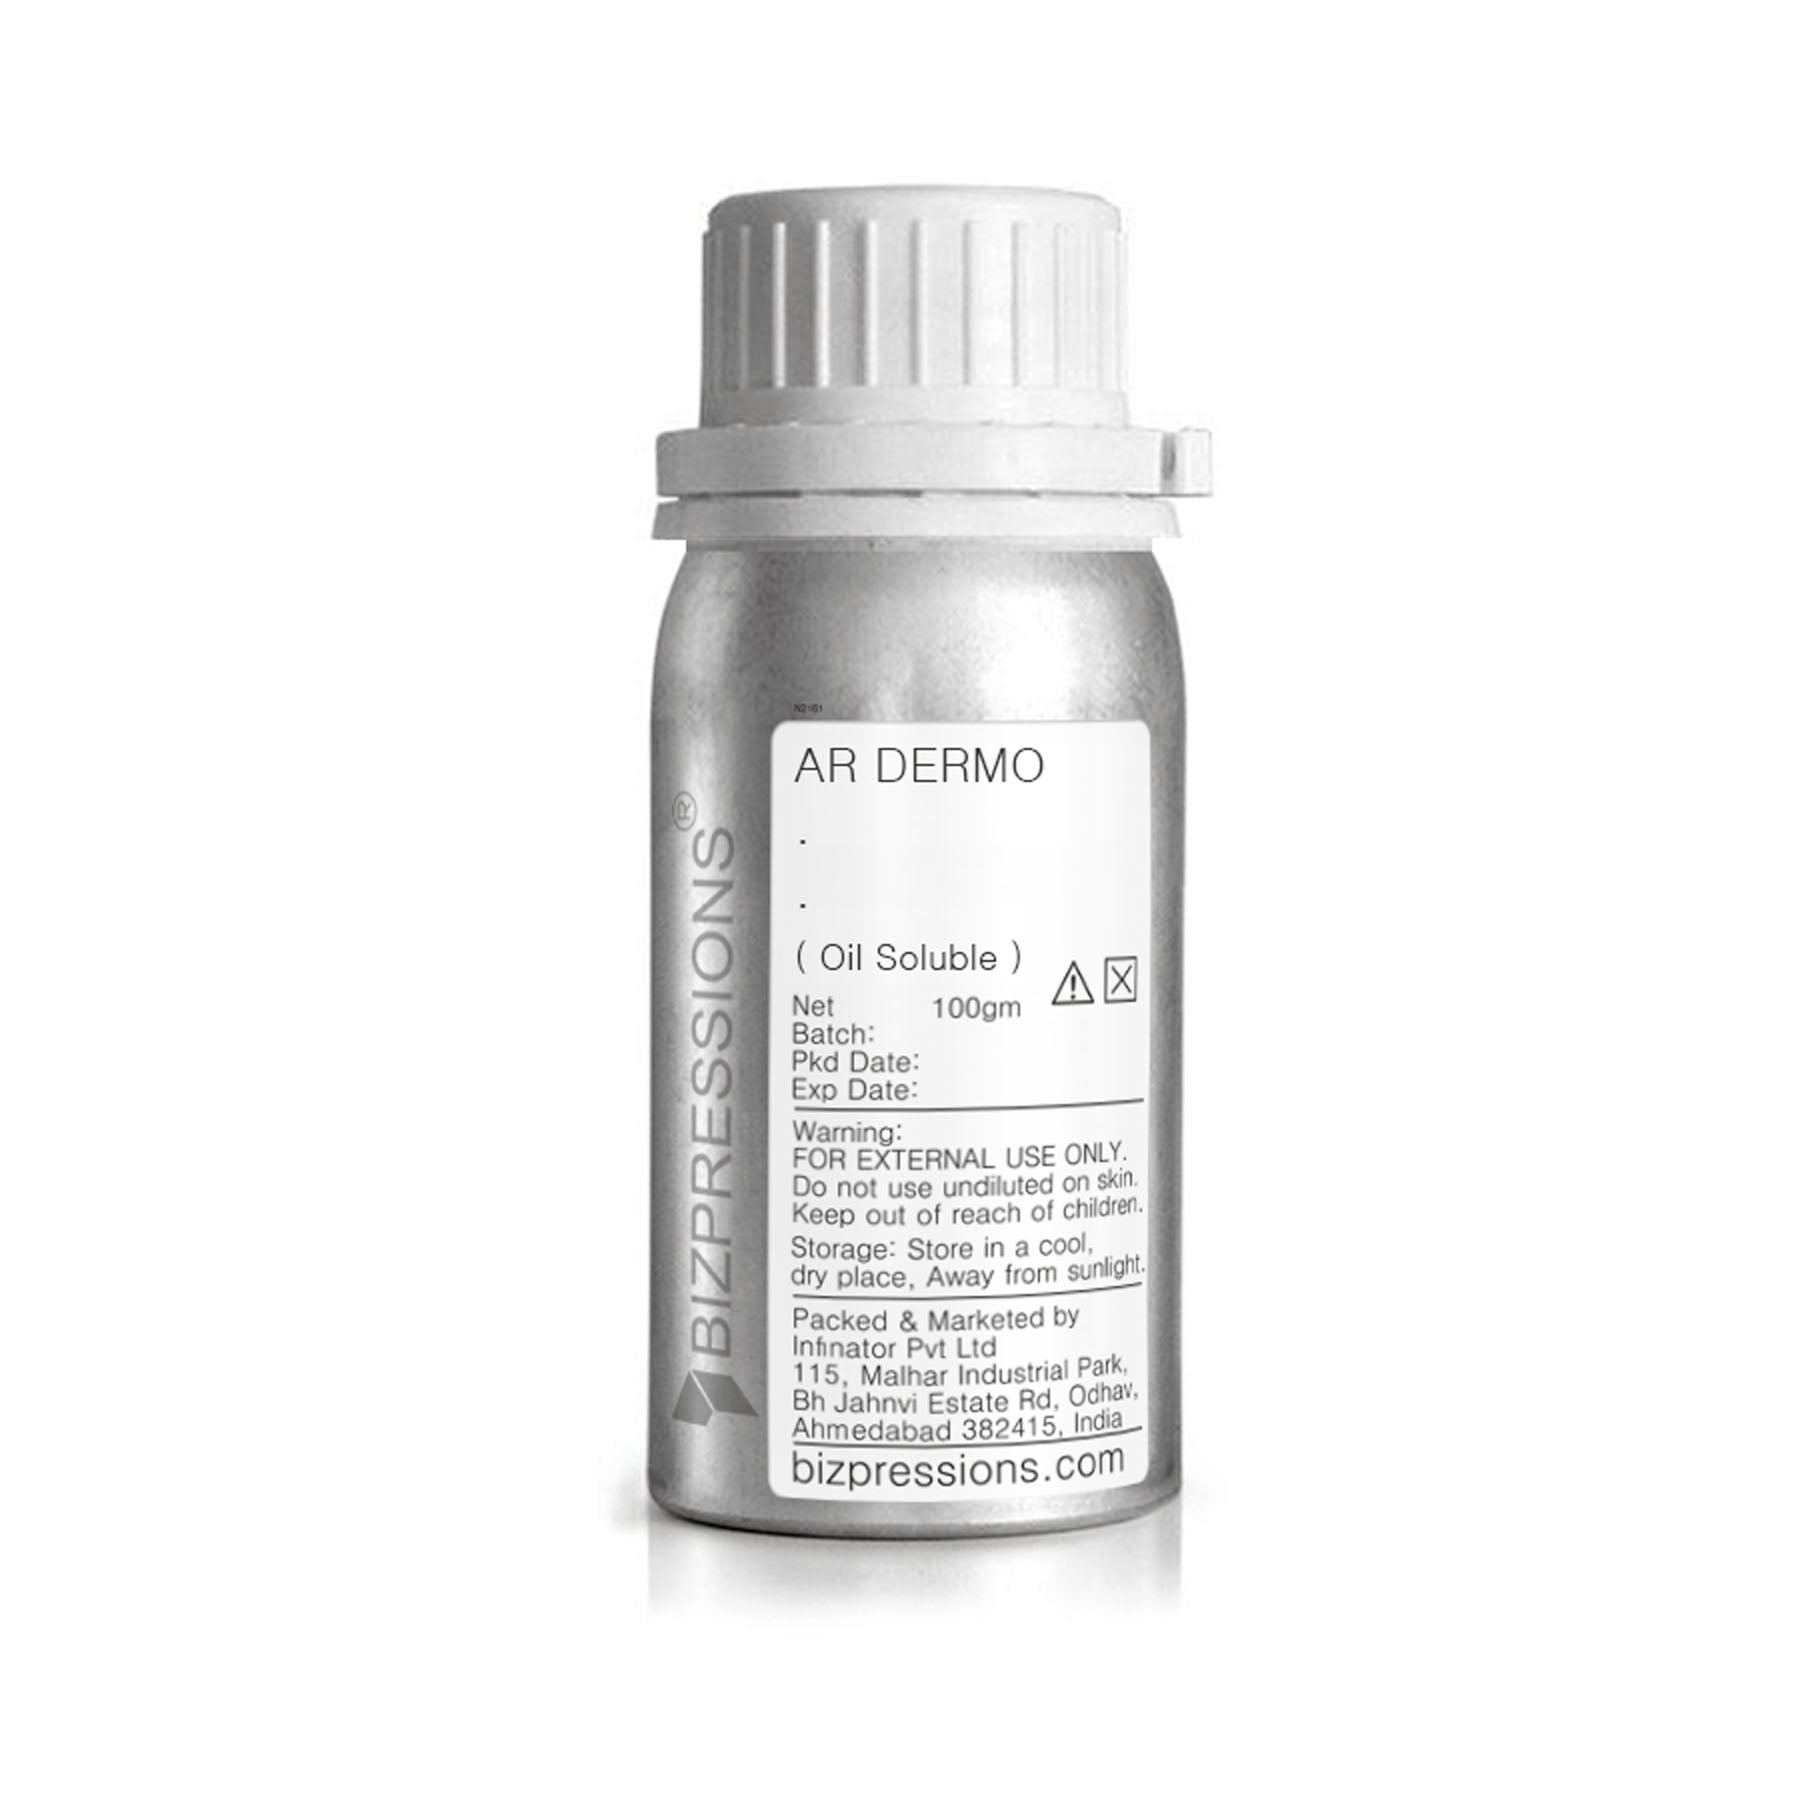 AR DERMO - Fragrance ( Oil Soluble ) - 100 gm